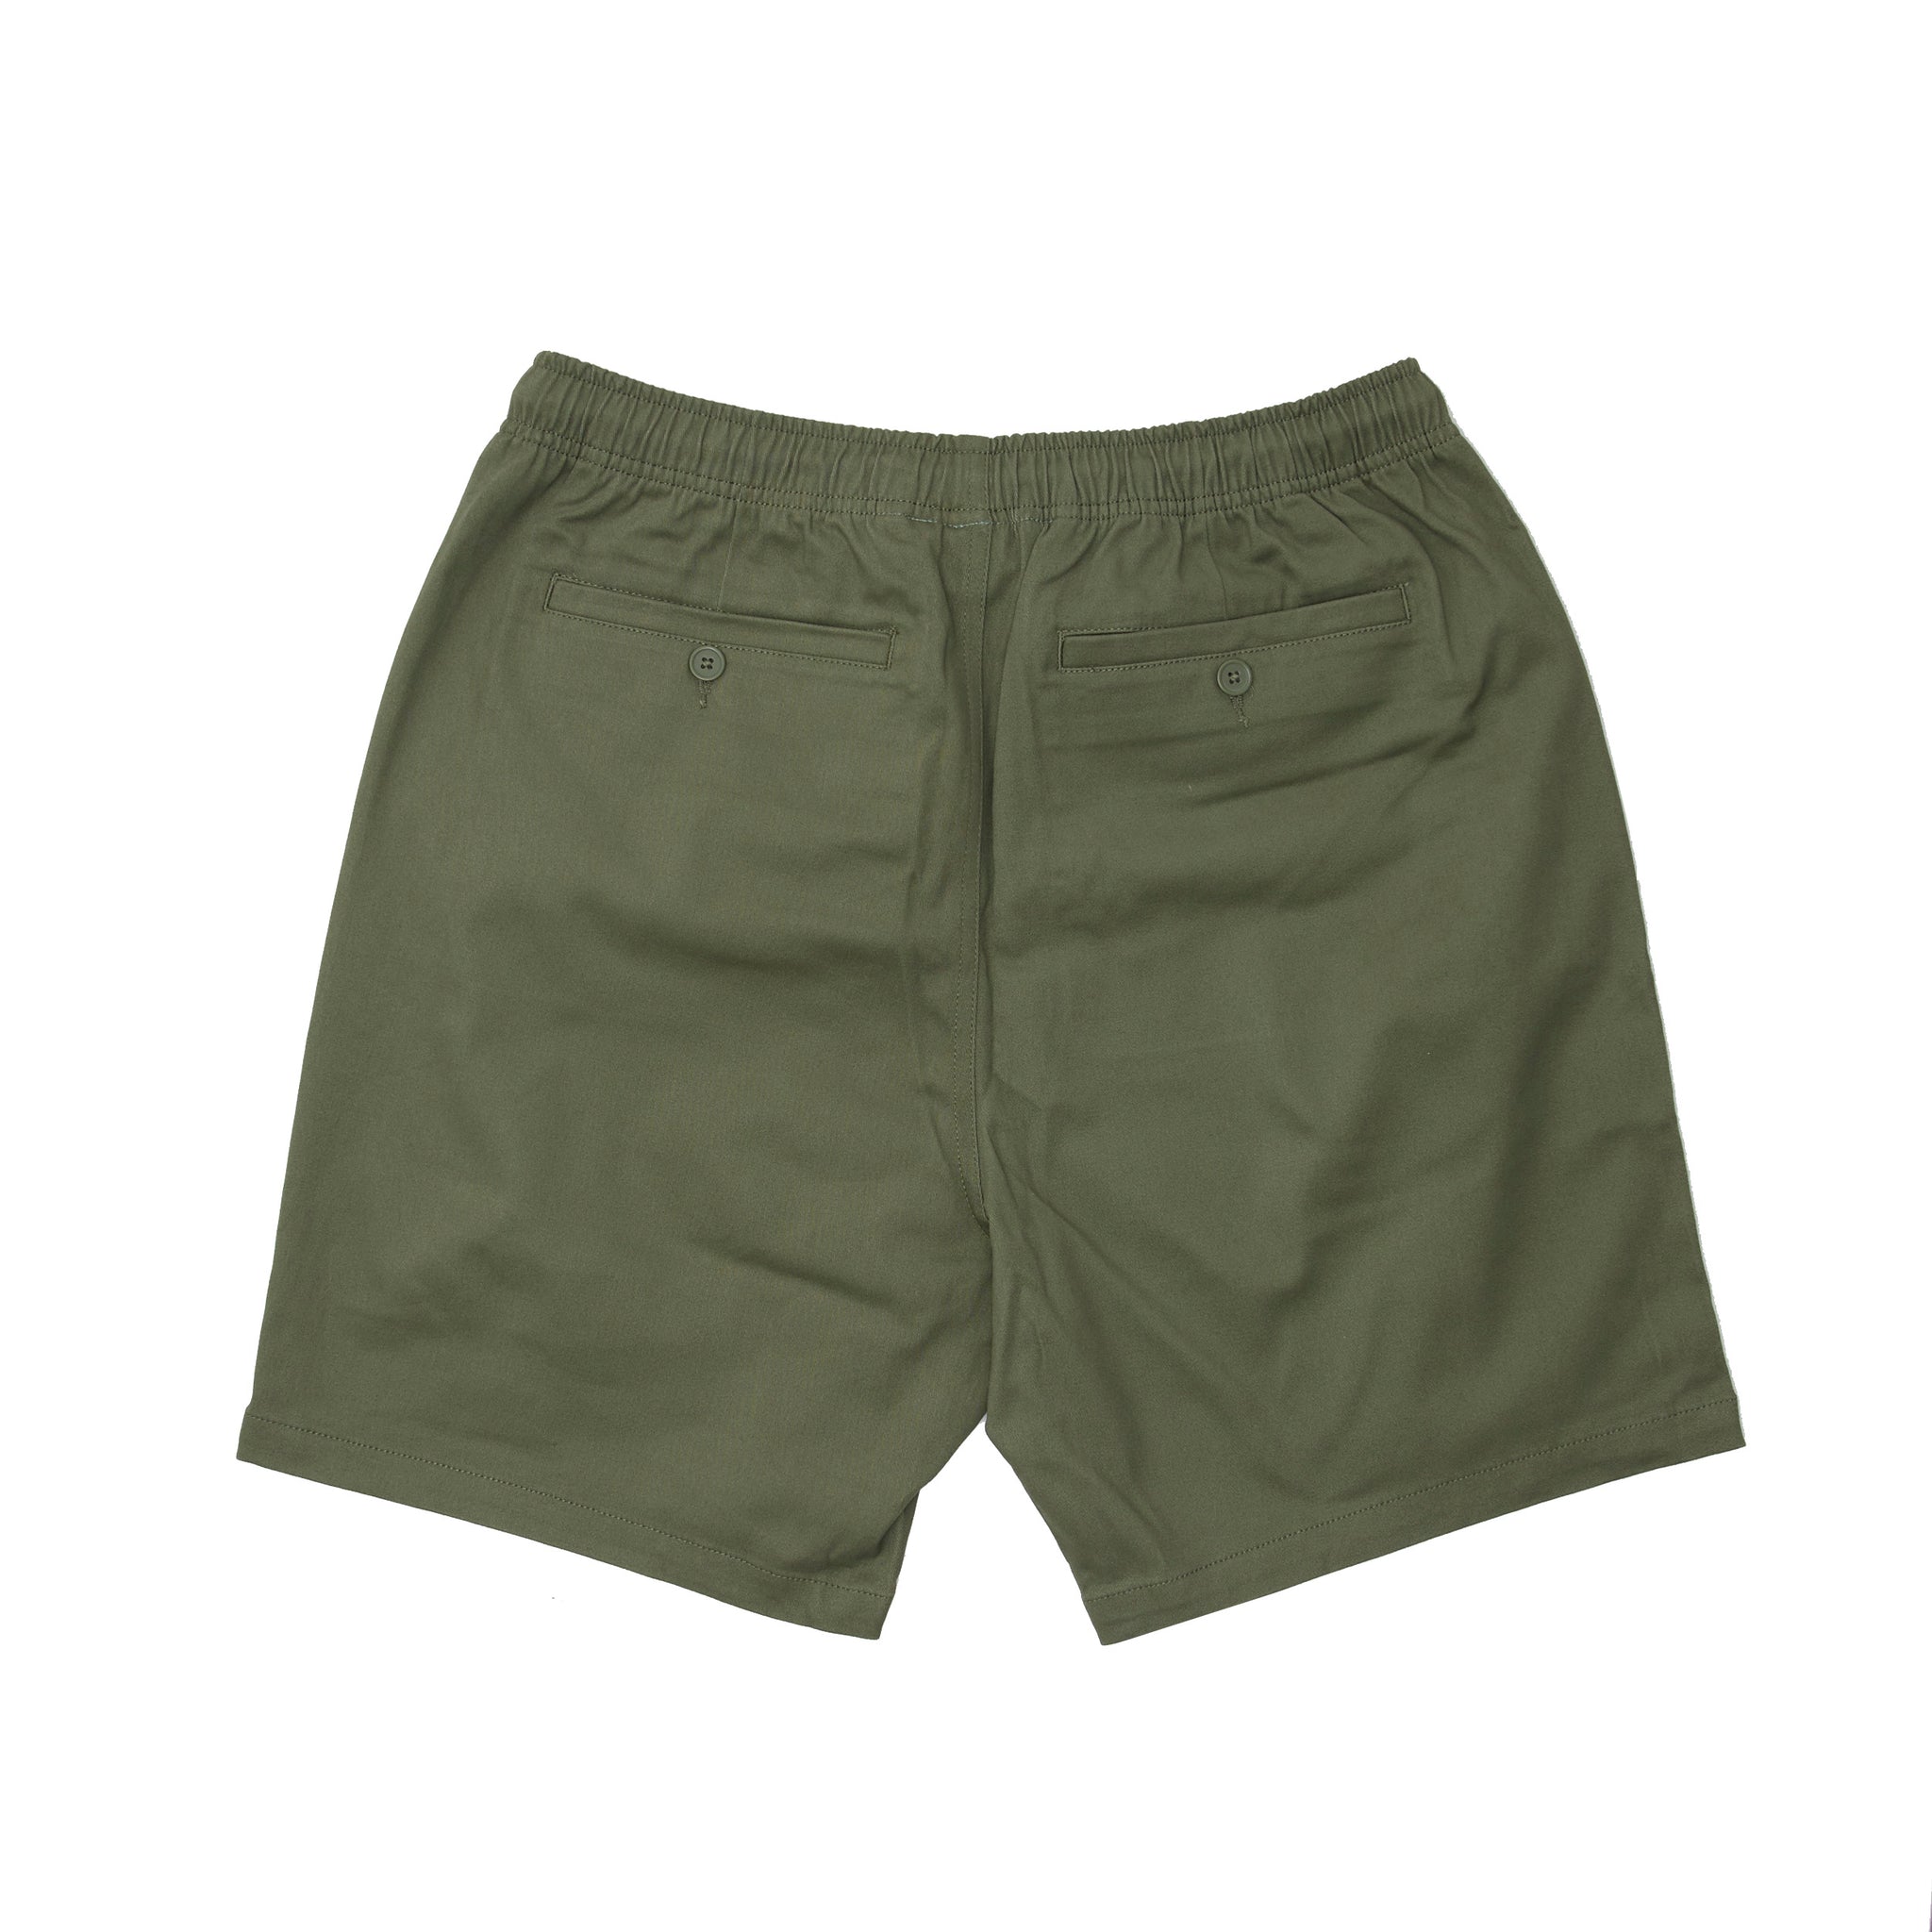 Global Shorts - Olive